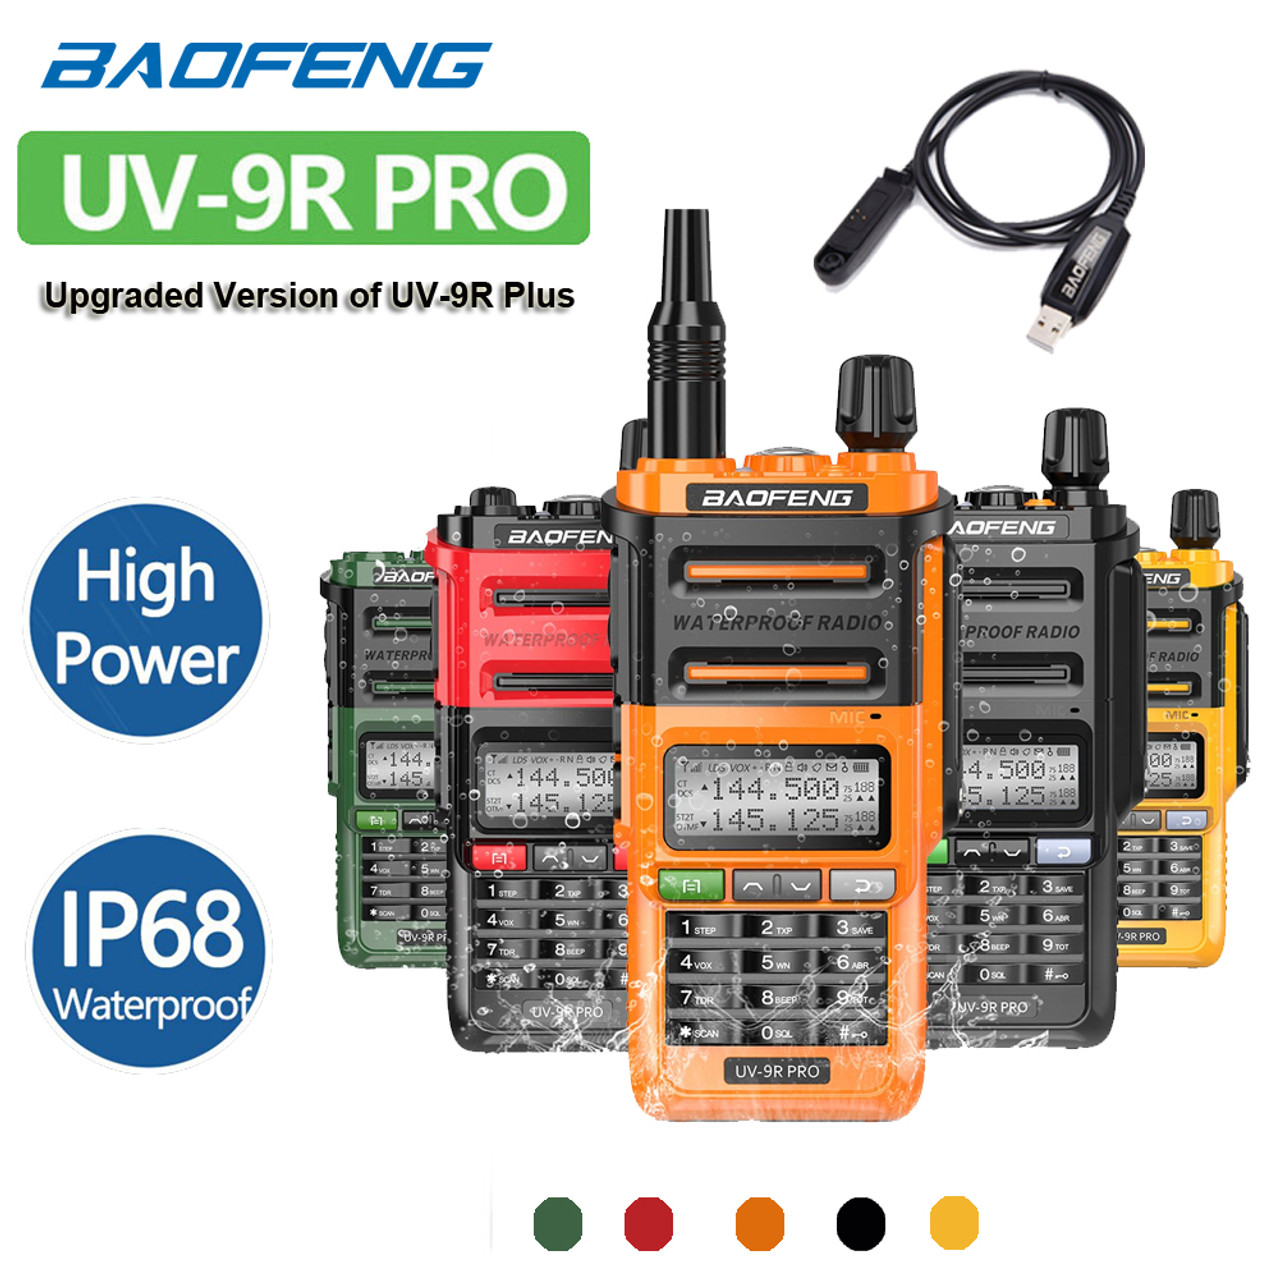 UV-9R PRO IP68 Waterproof UHF/VHF Walkie Talkies Long Range Two Way  Programming Cable BaoFeng Radio UK